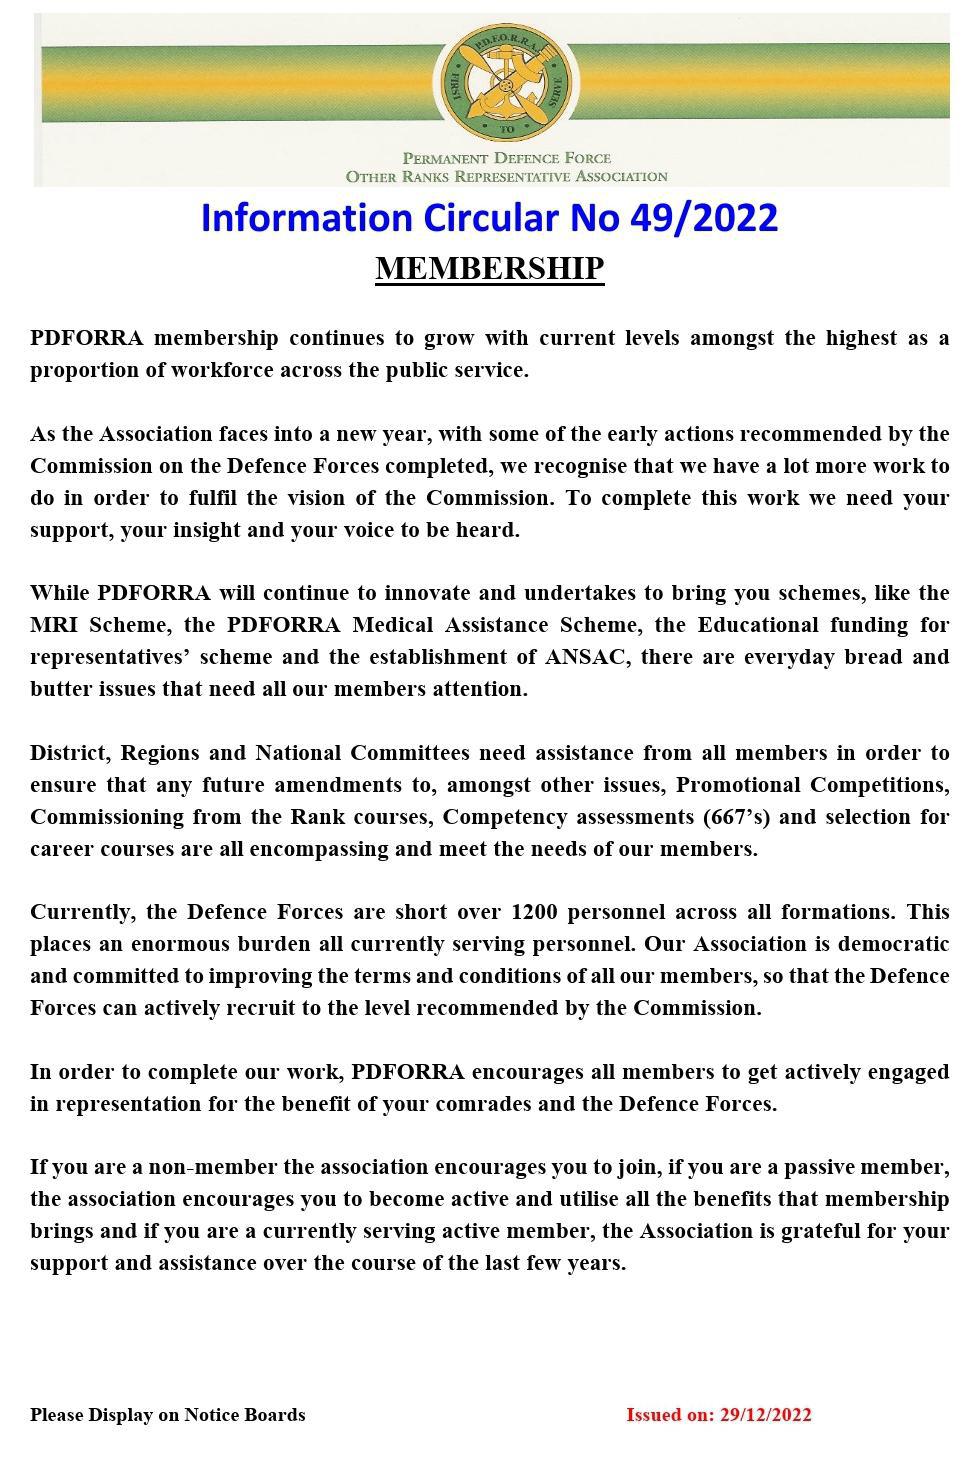 Information Circular No 49 of 22 - Membership